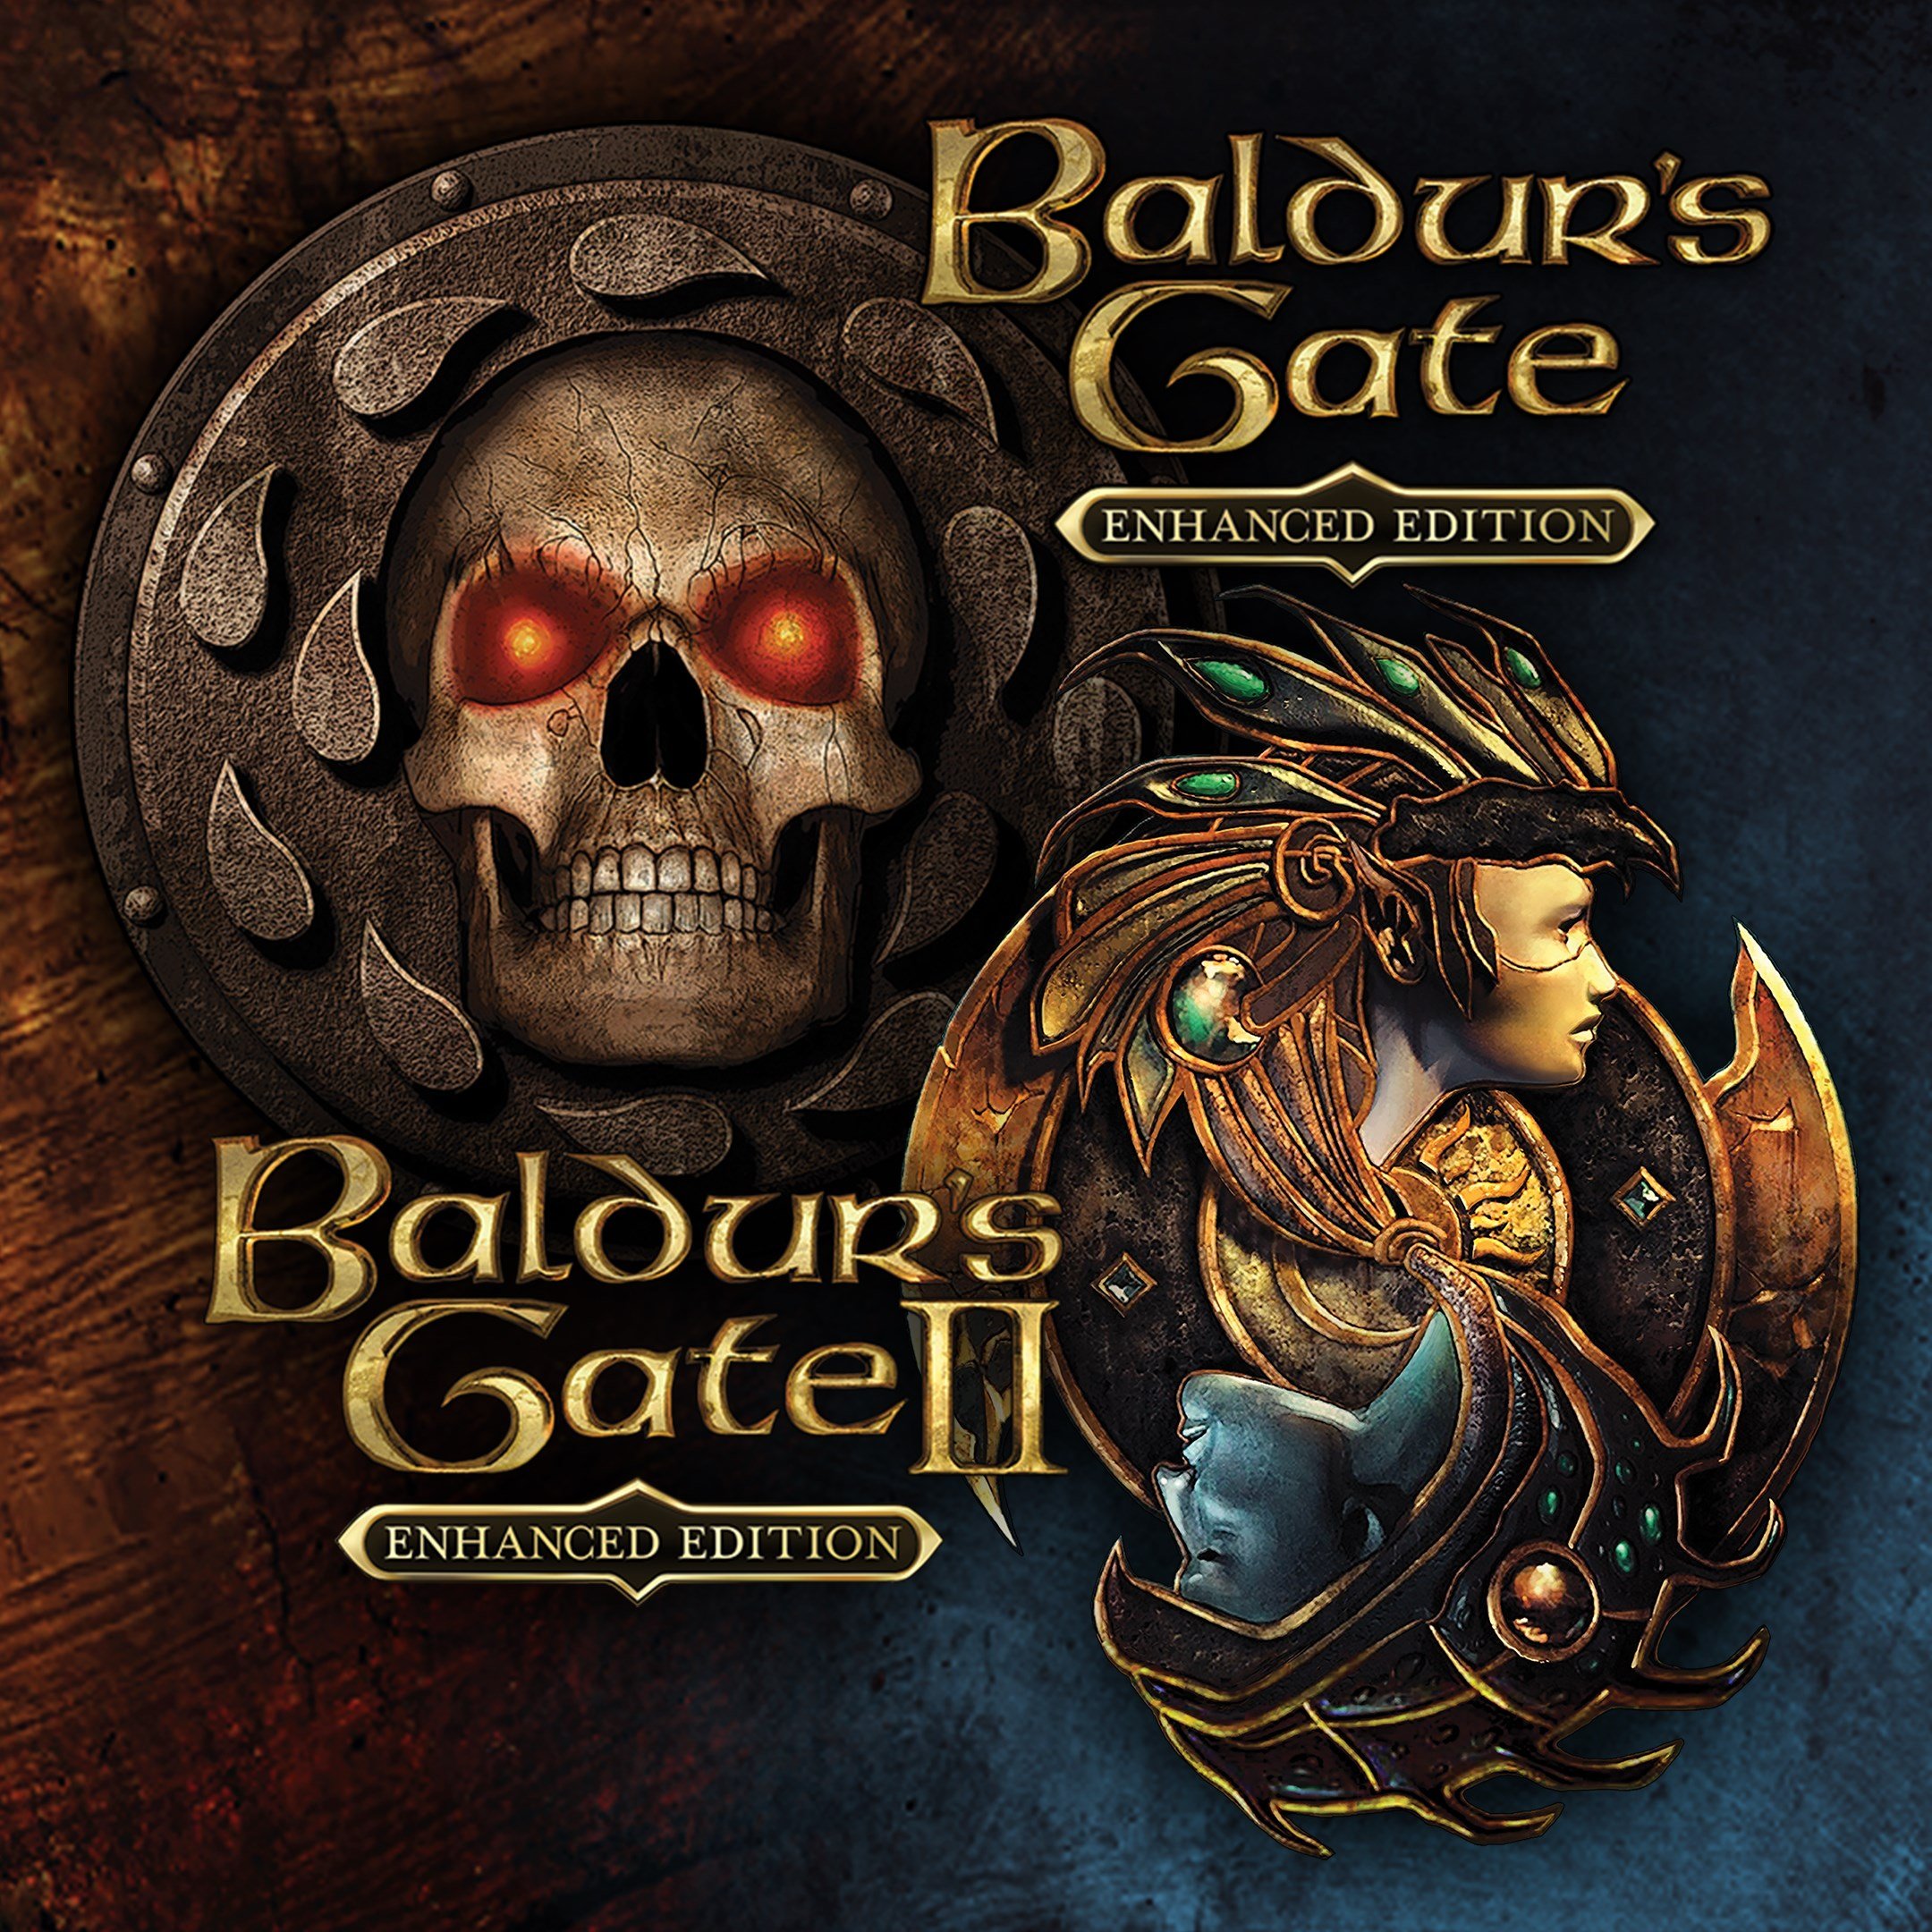 Boxart for Baldur's Gate and Baldur's Gate II: Enhanced Editions